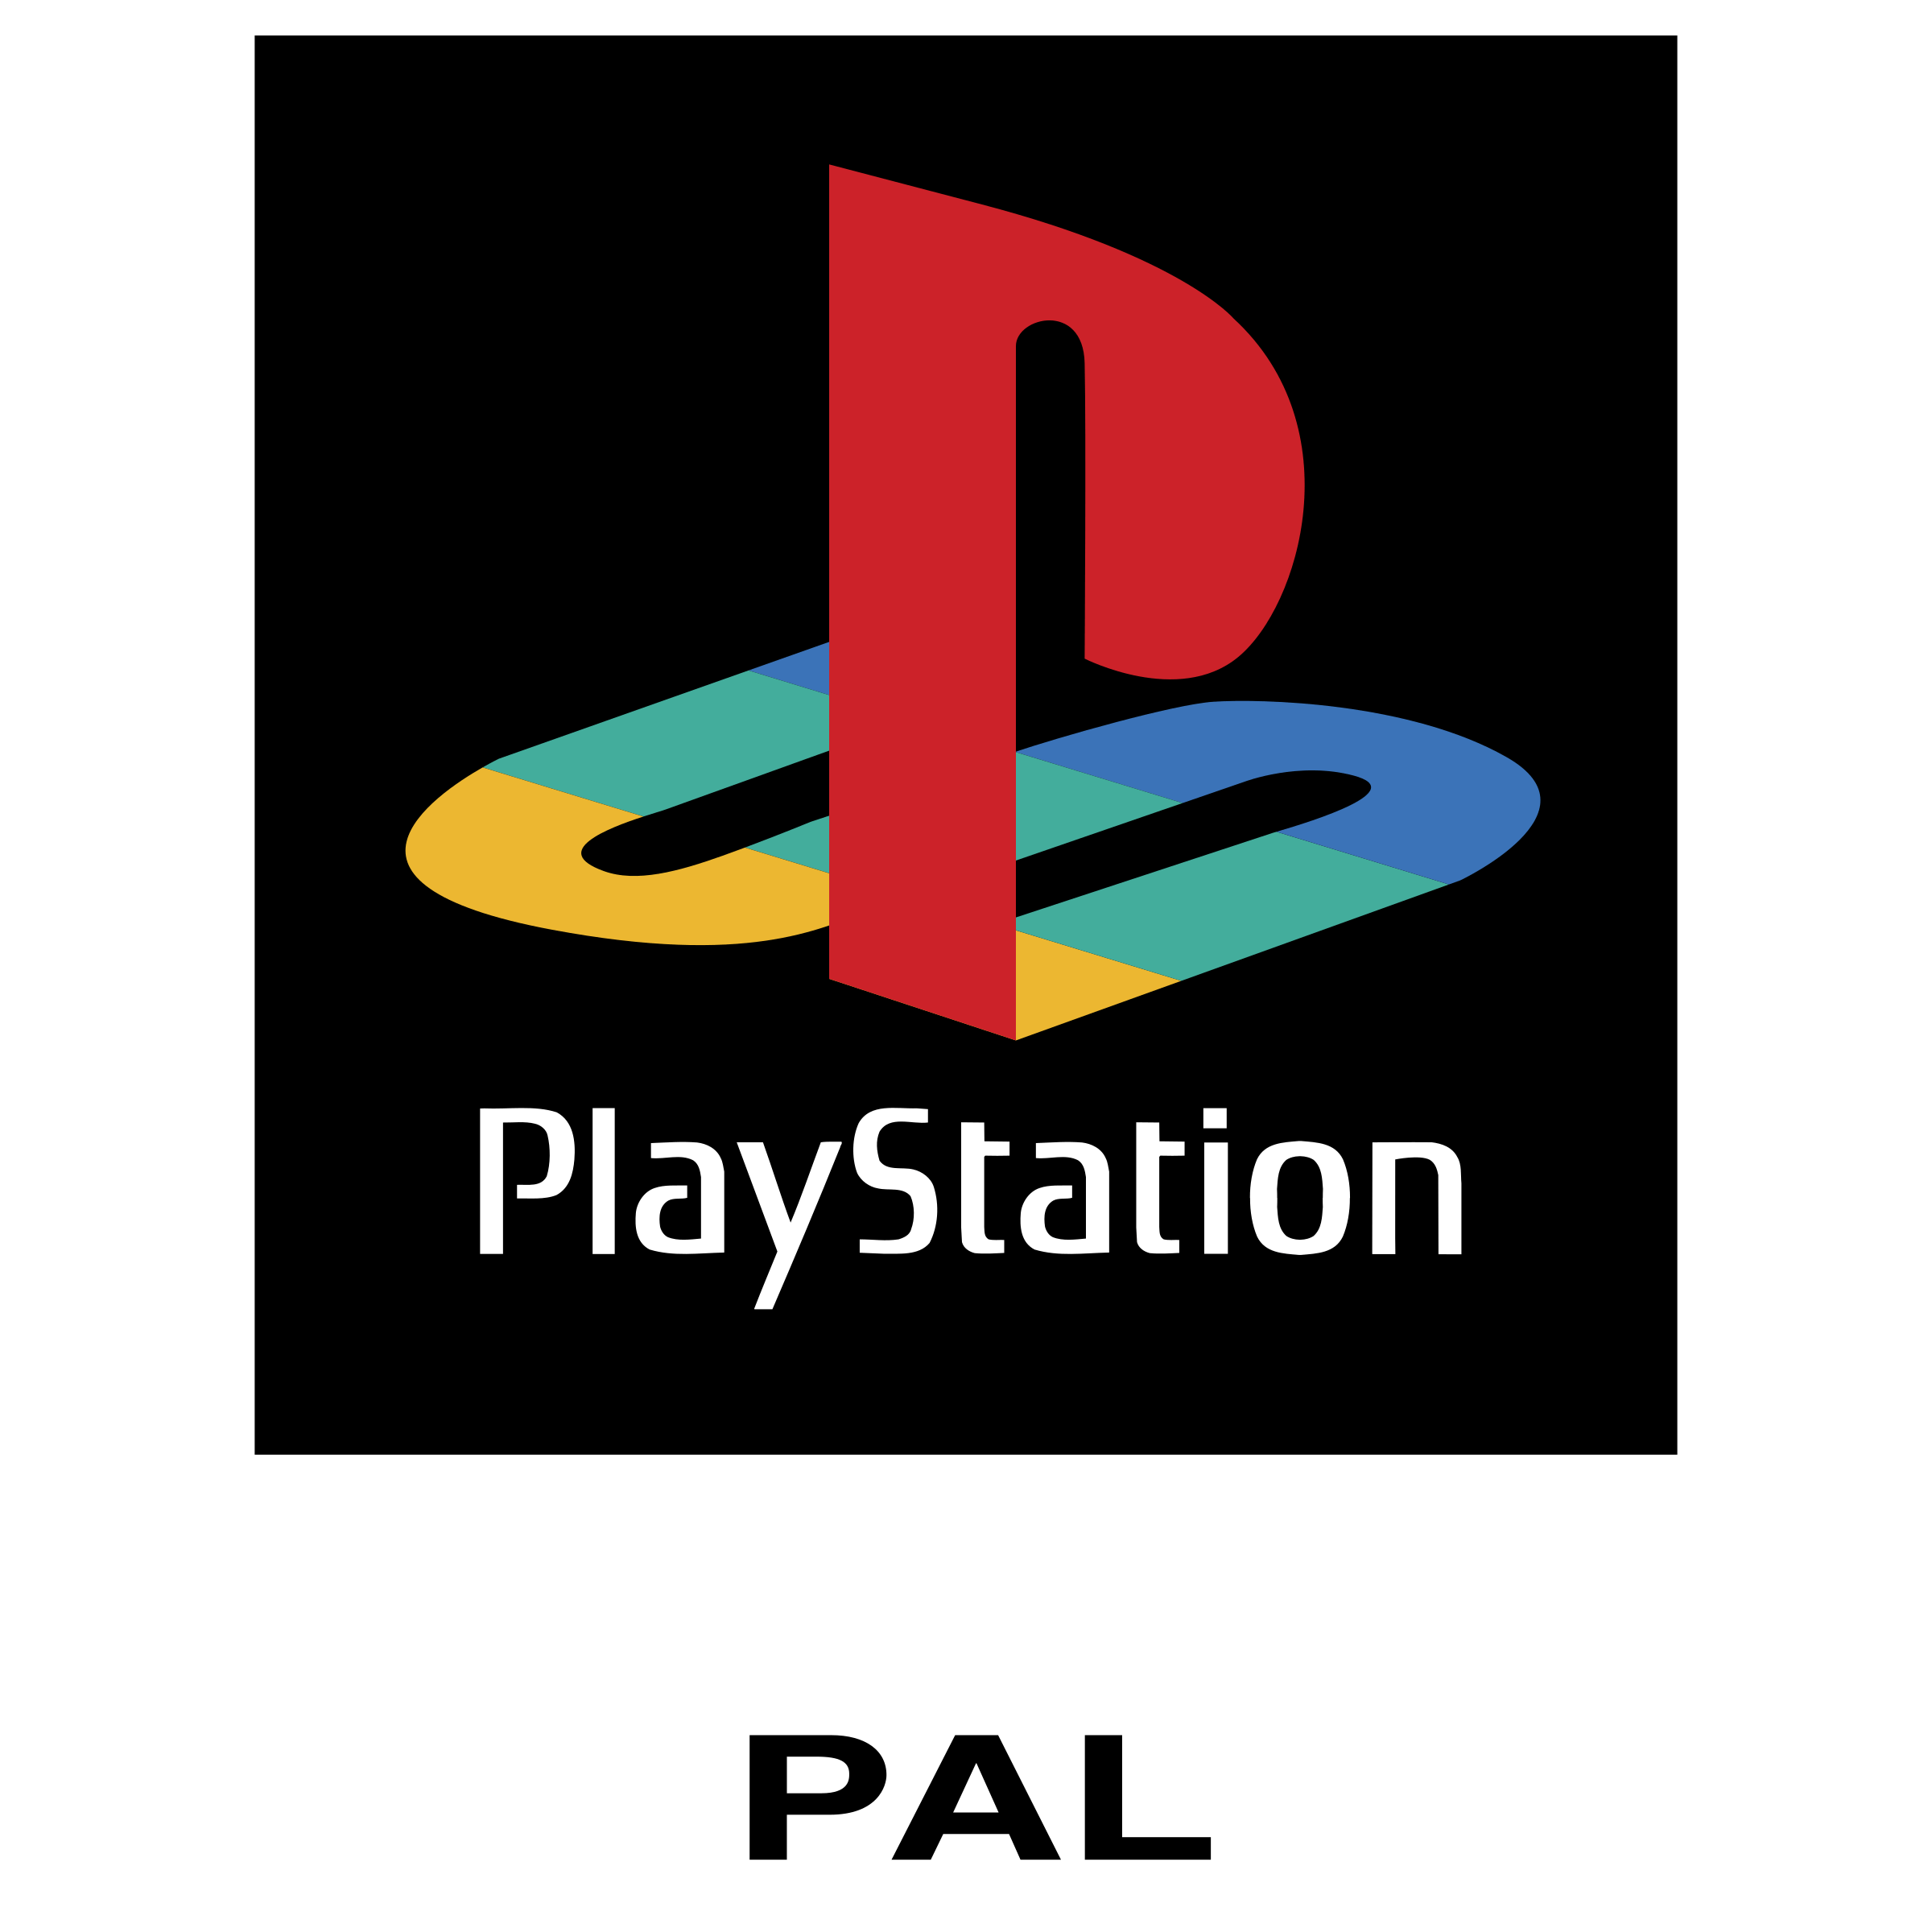 Pal Logo - Playstation PAL Logo PNG Transparent & SVG Vector - Freebie Supply